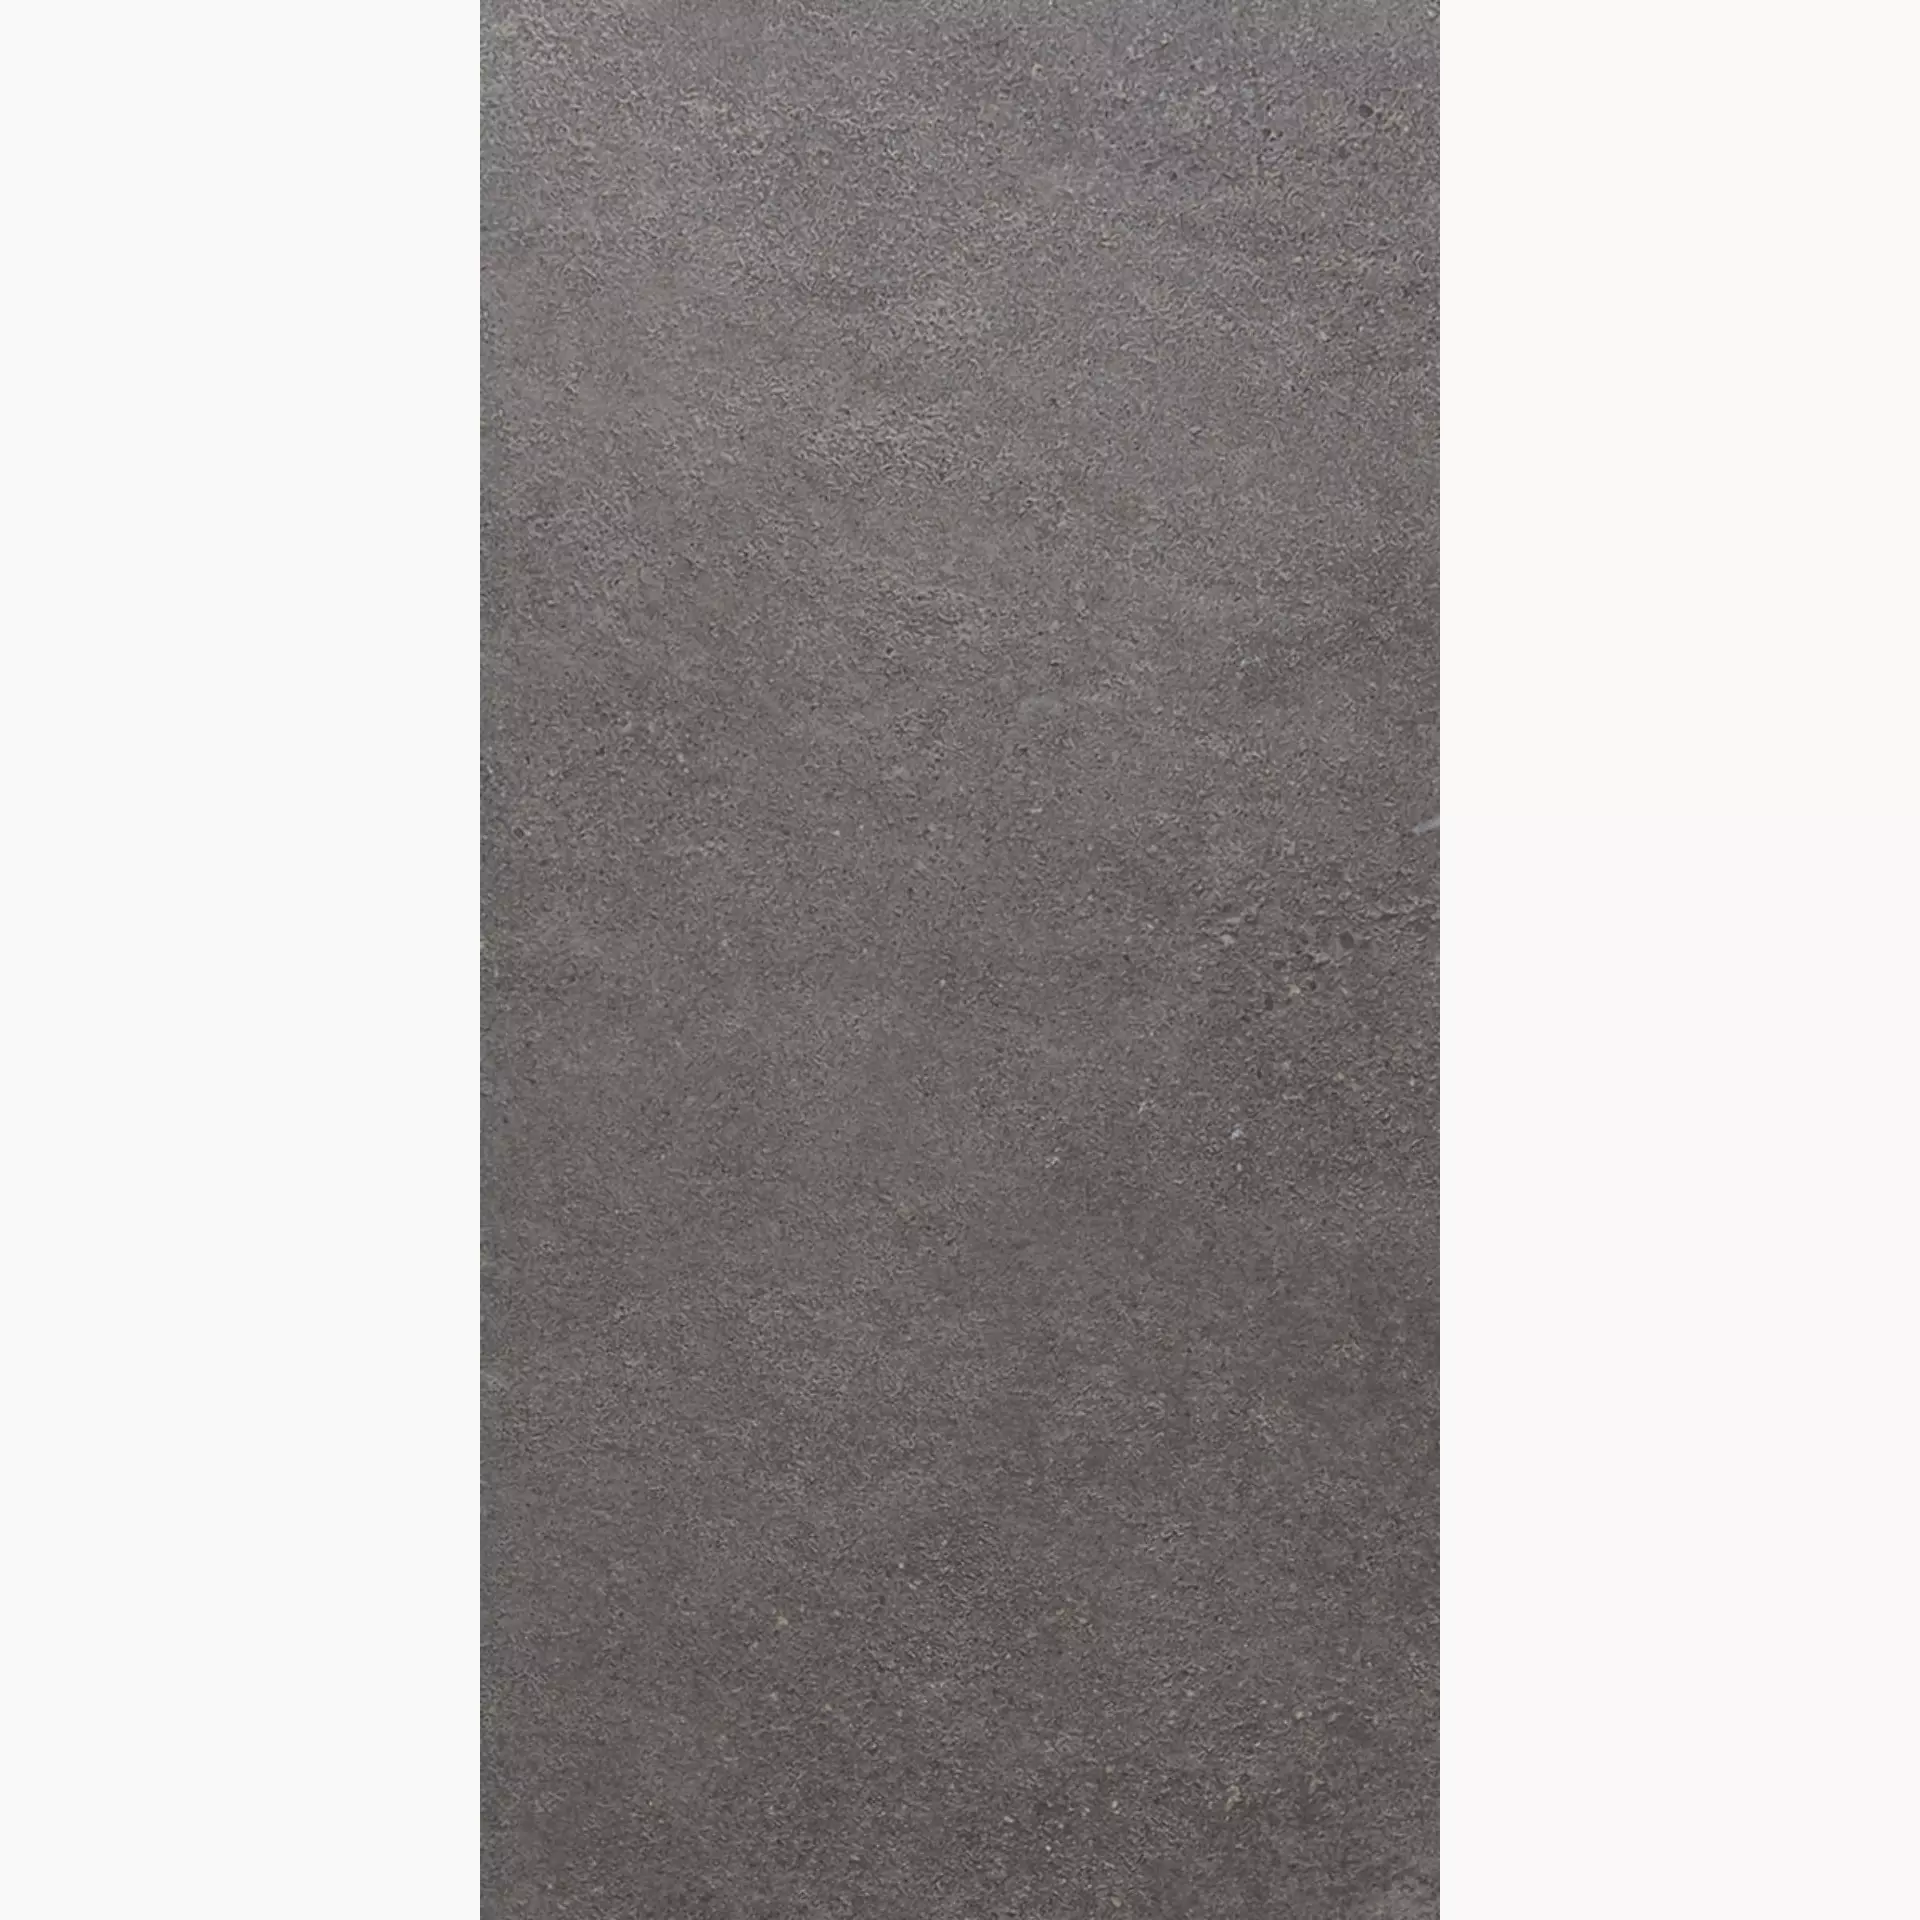 Rondine Loft Dark Naturale J89018 30x60cm rectified 8,5mm